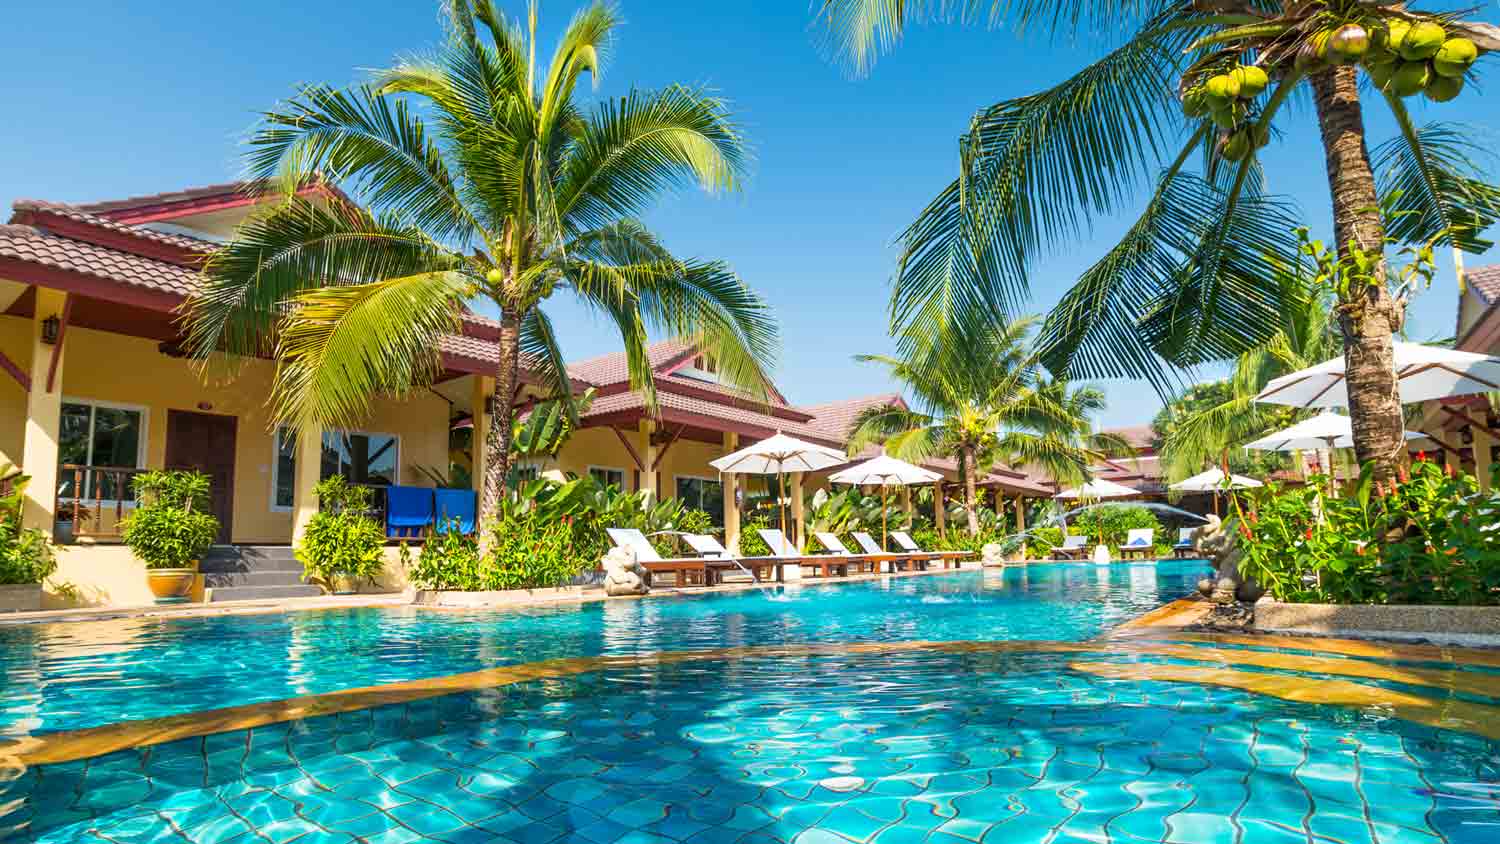 Thailand Phuket yoga retreat resort swimming pool